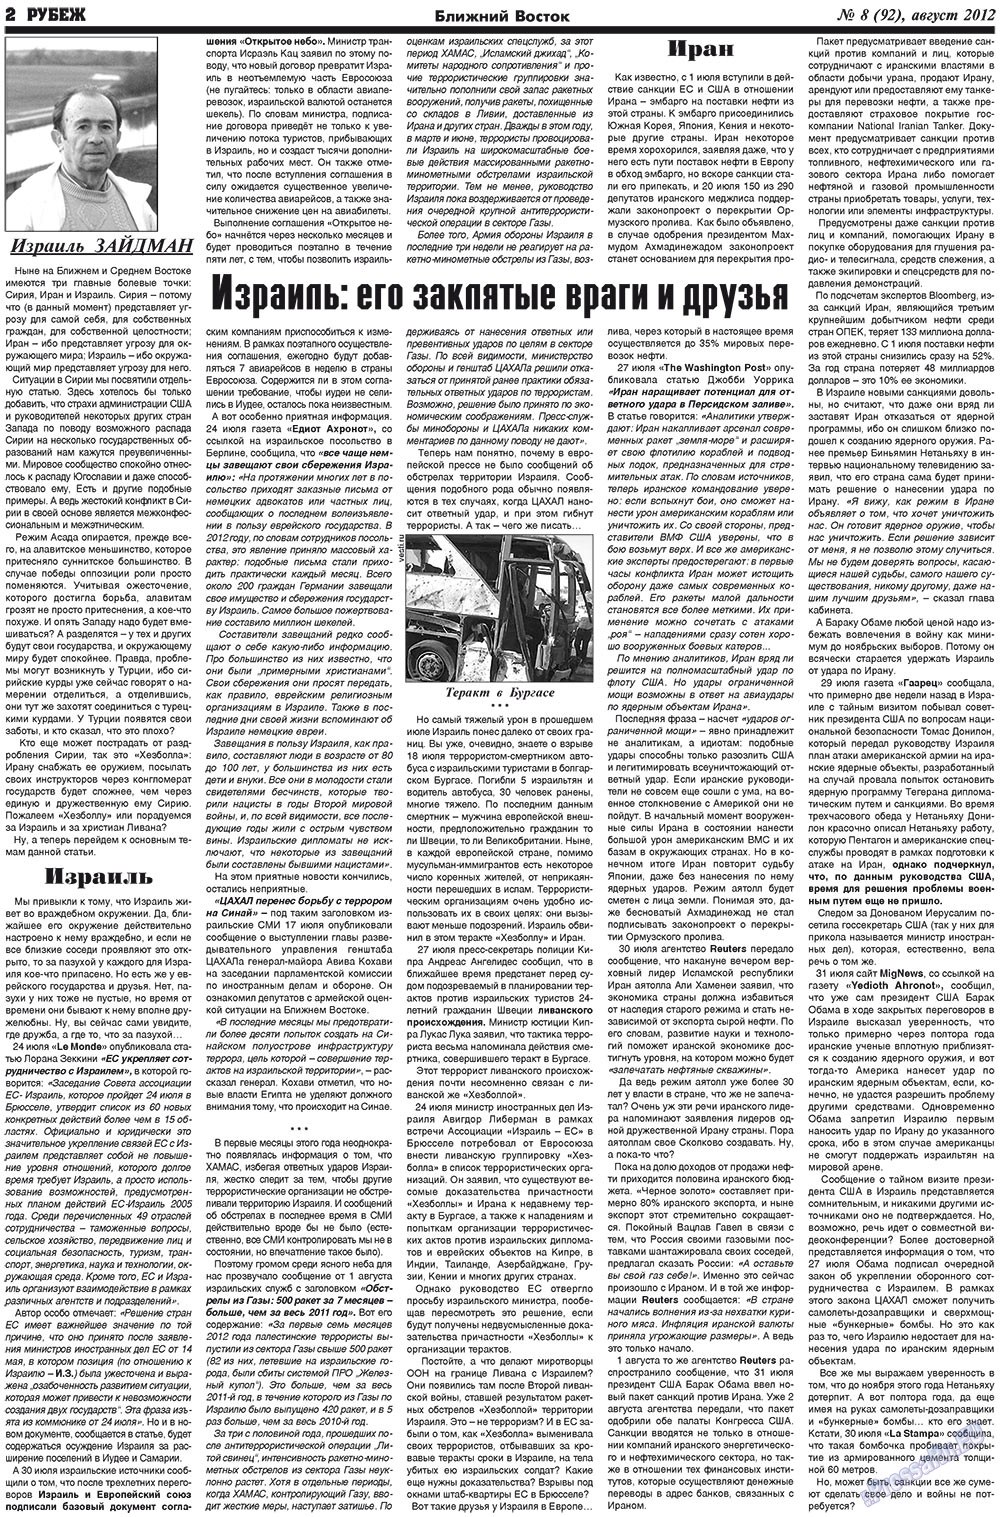 Рубеж, газета. 2012 №8 стр.2